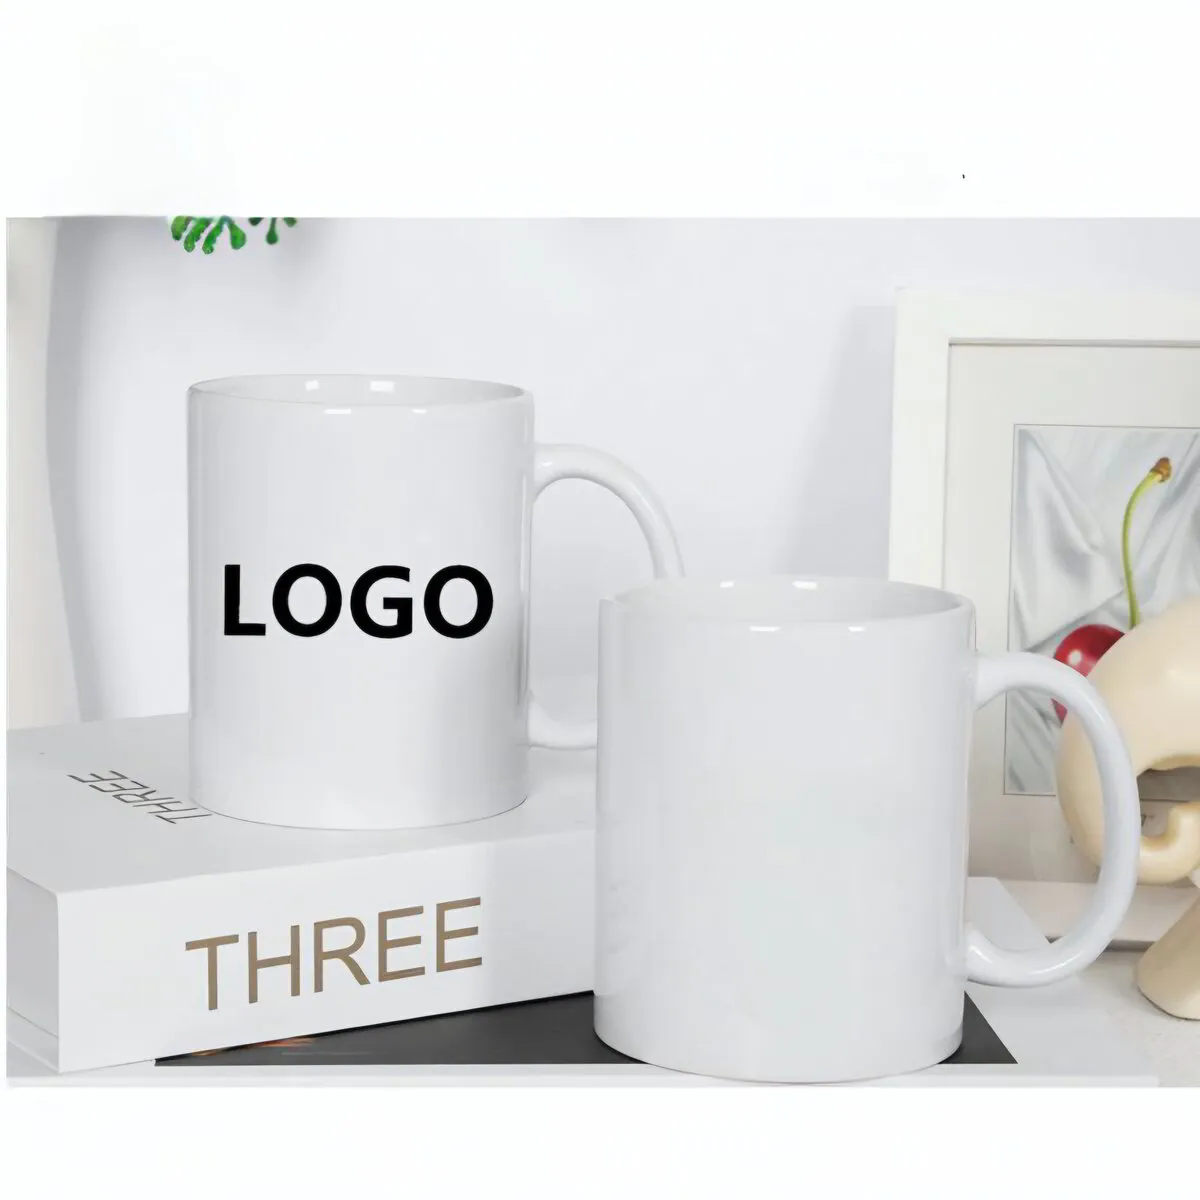  11oz White Ceramic Mug